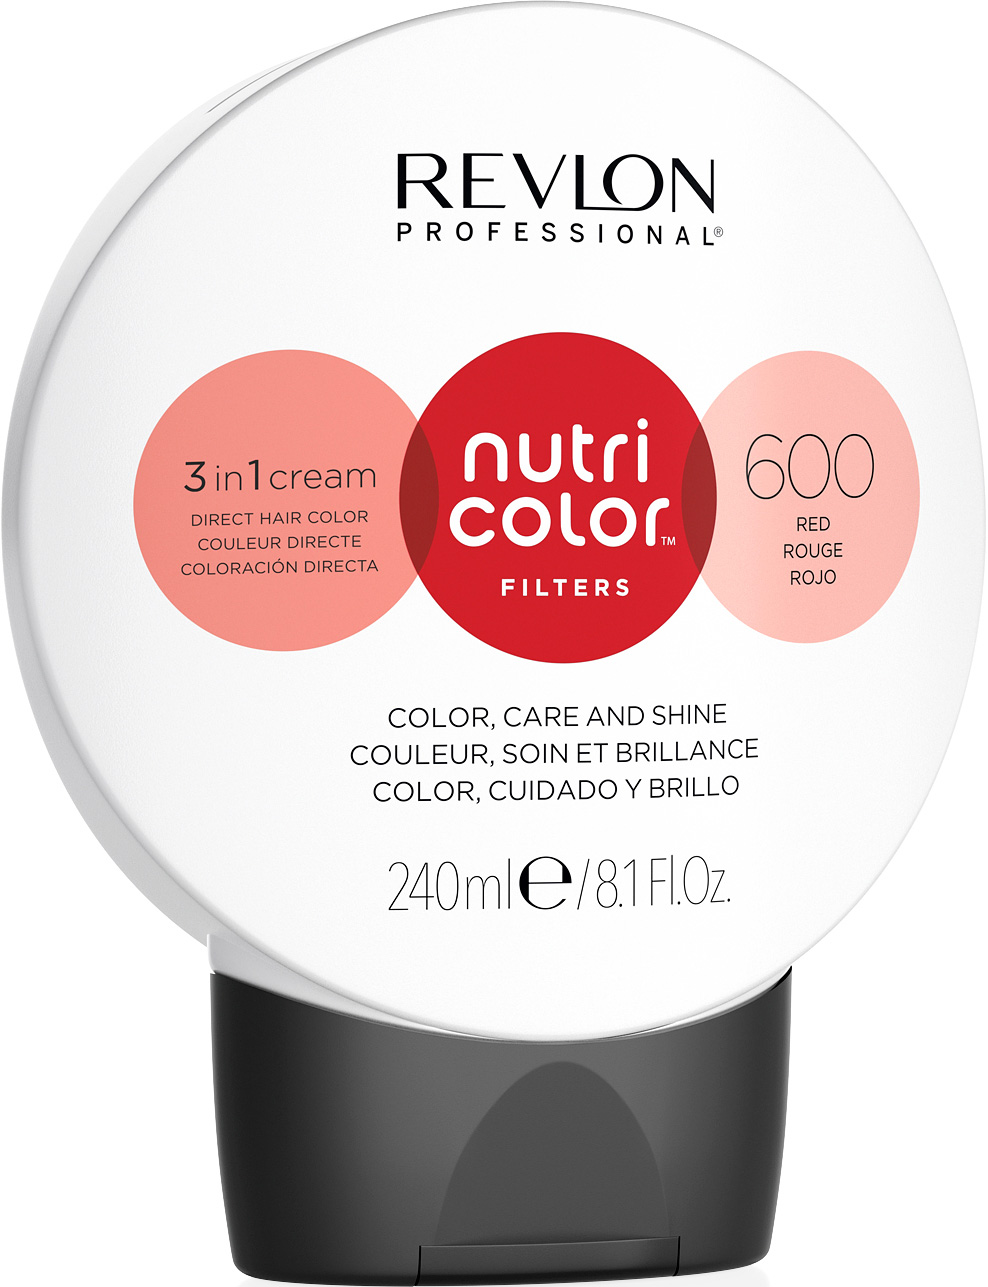 Revlon Nutri Color 600 red 240ml